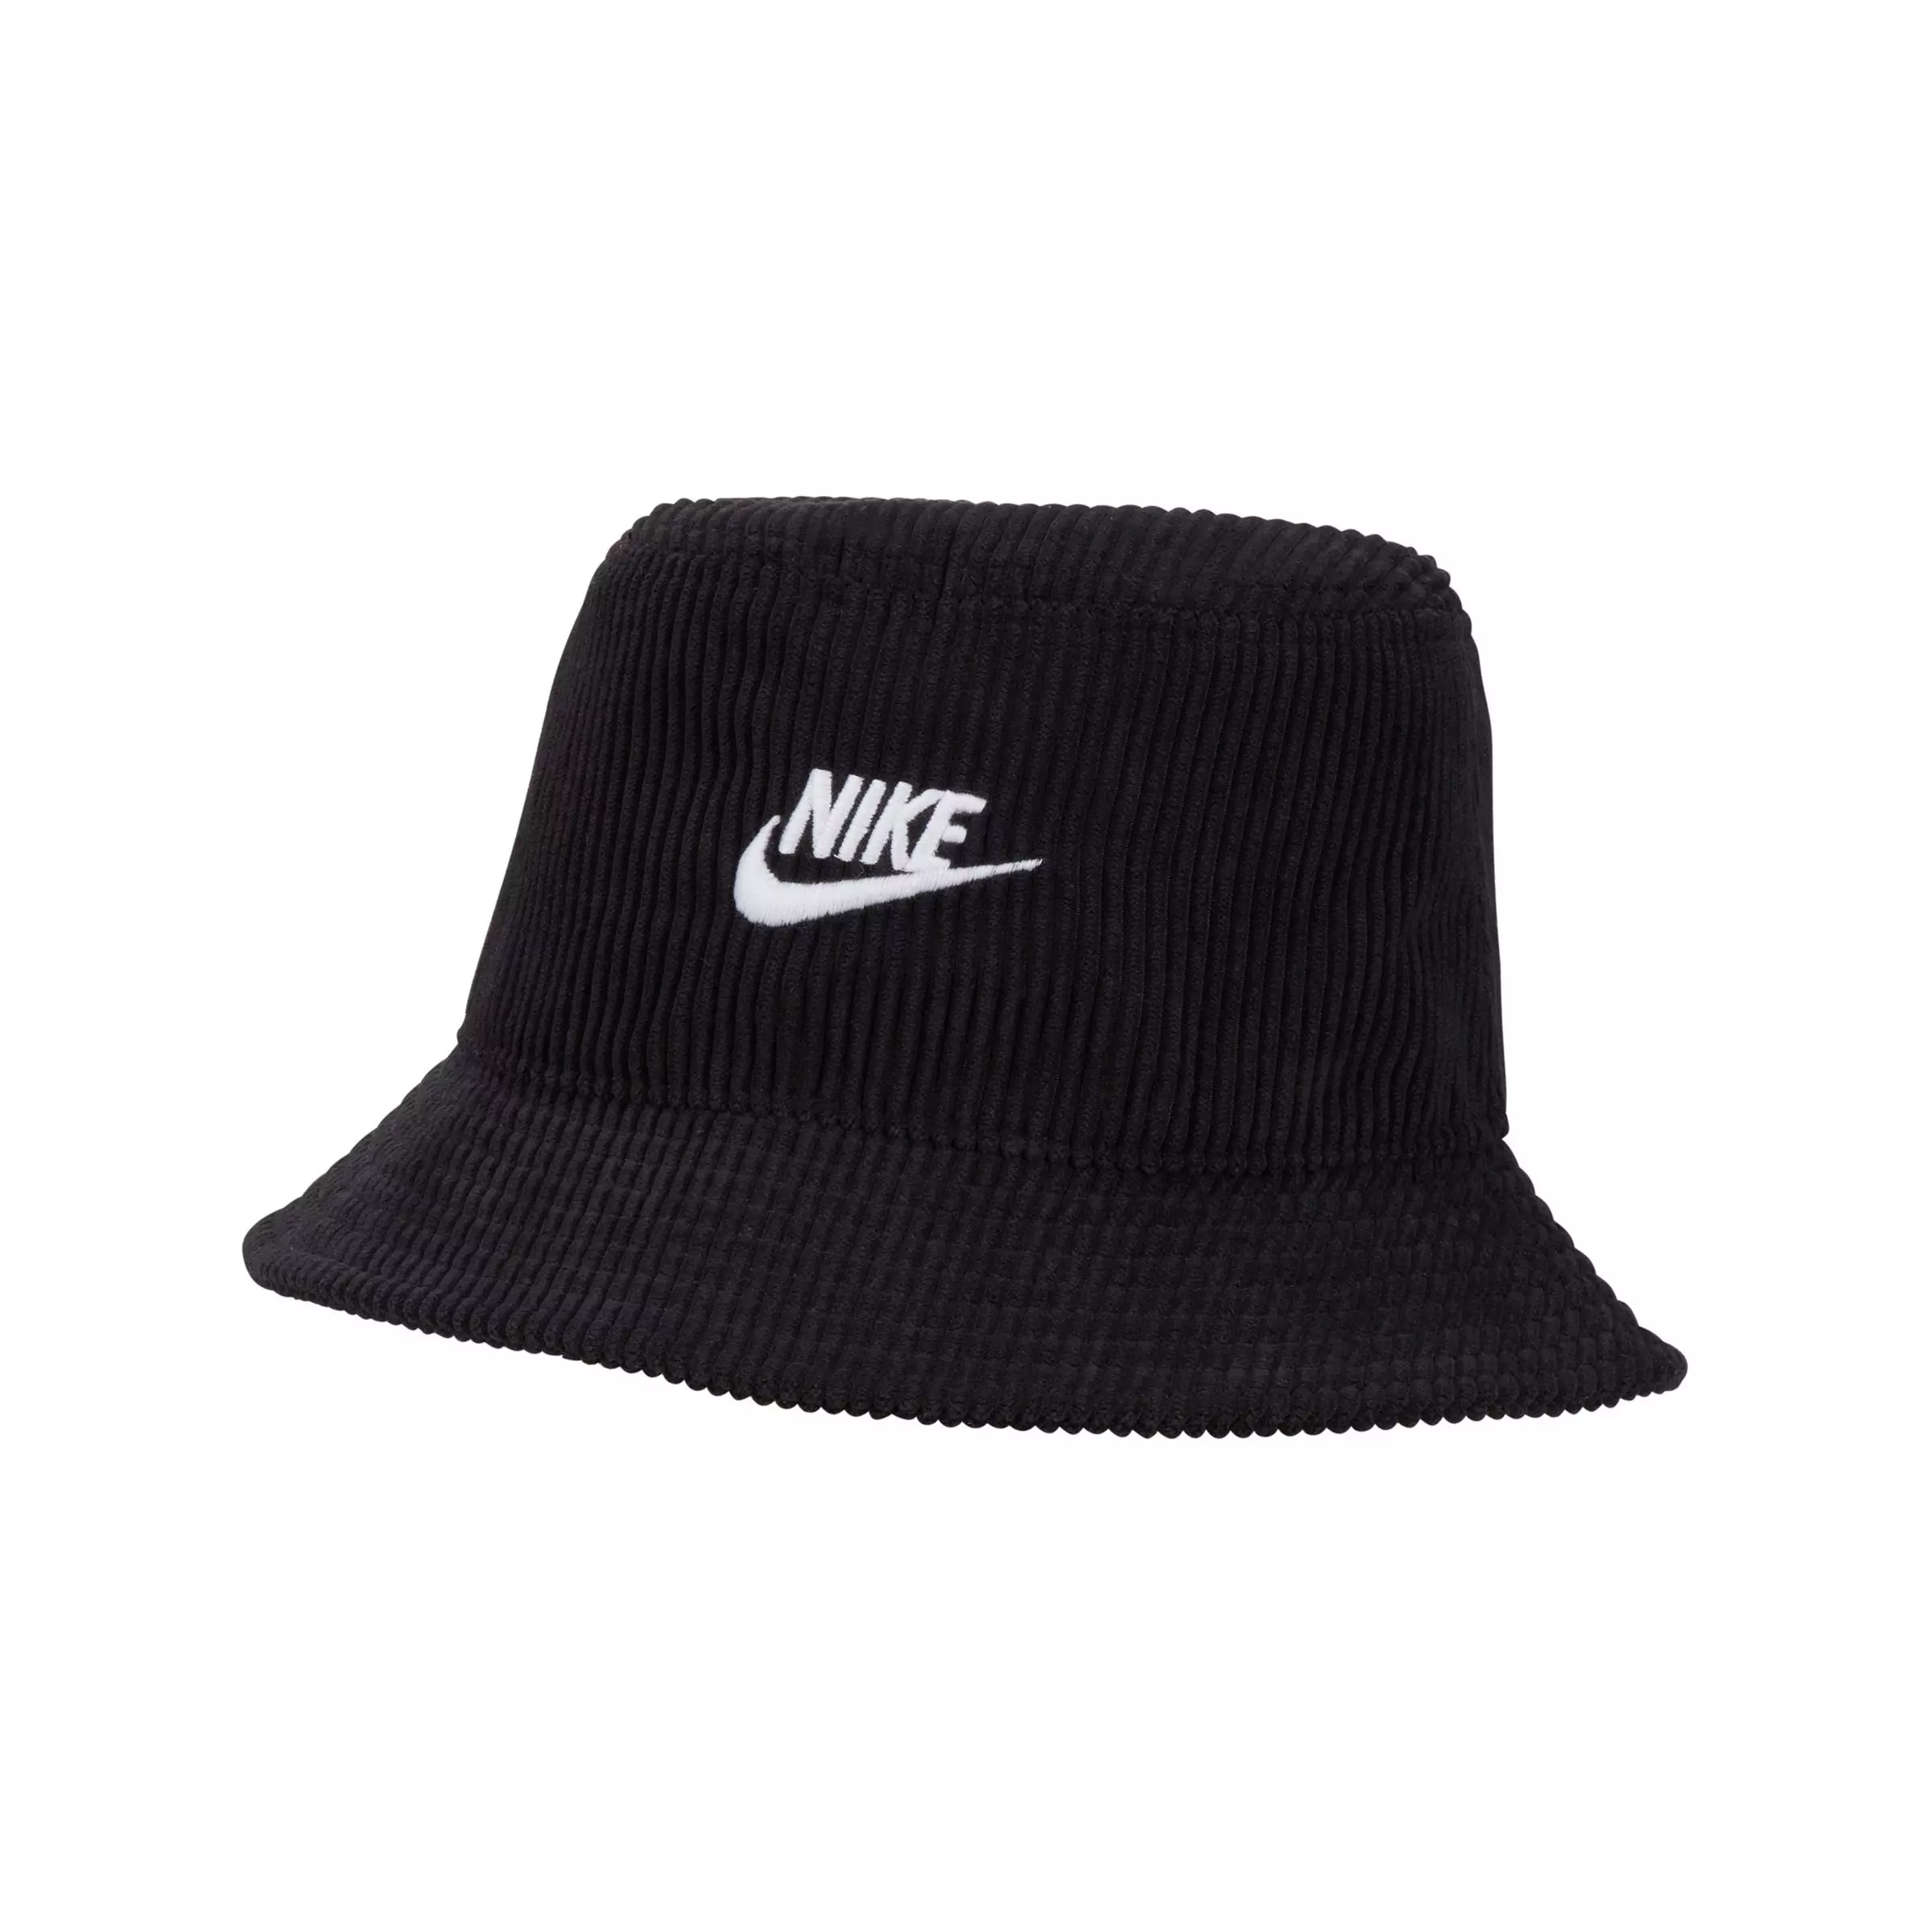 Nike Apex Corduroy Bucket Hat